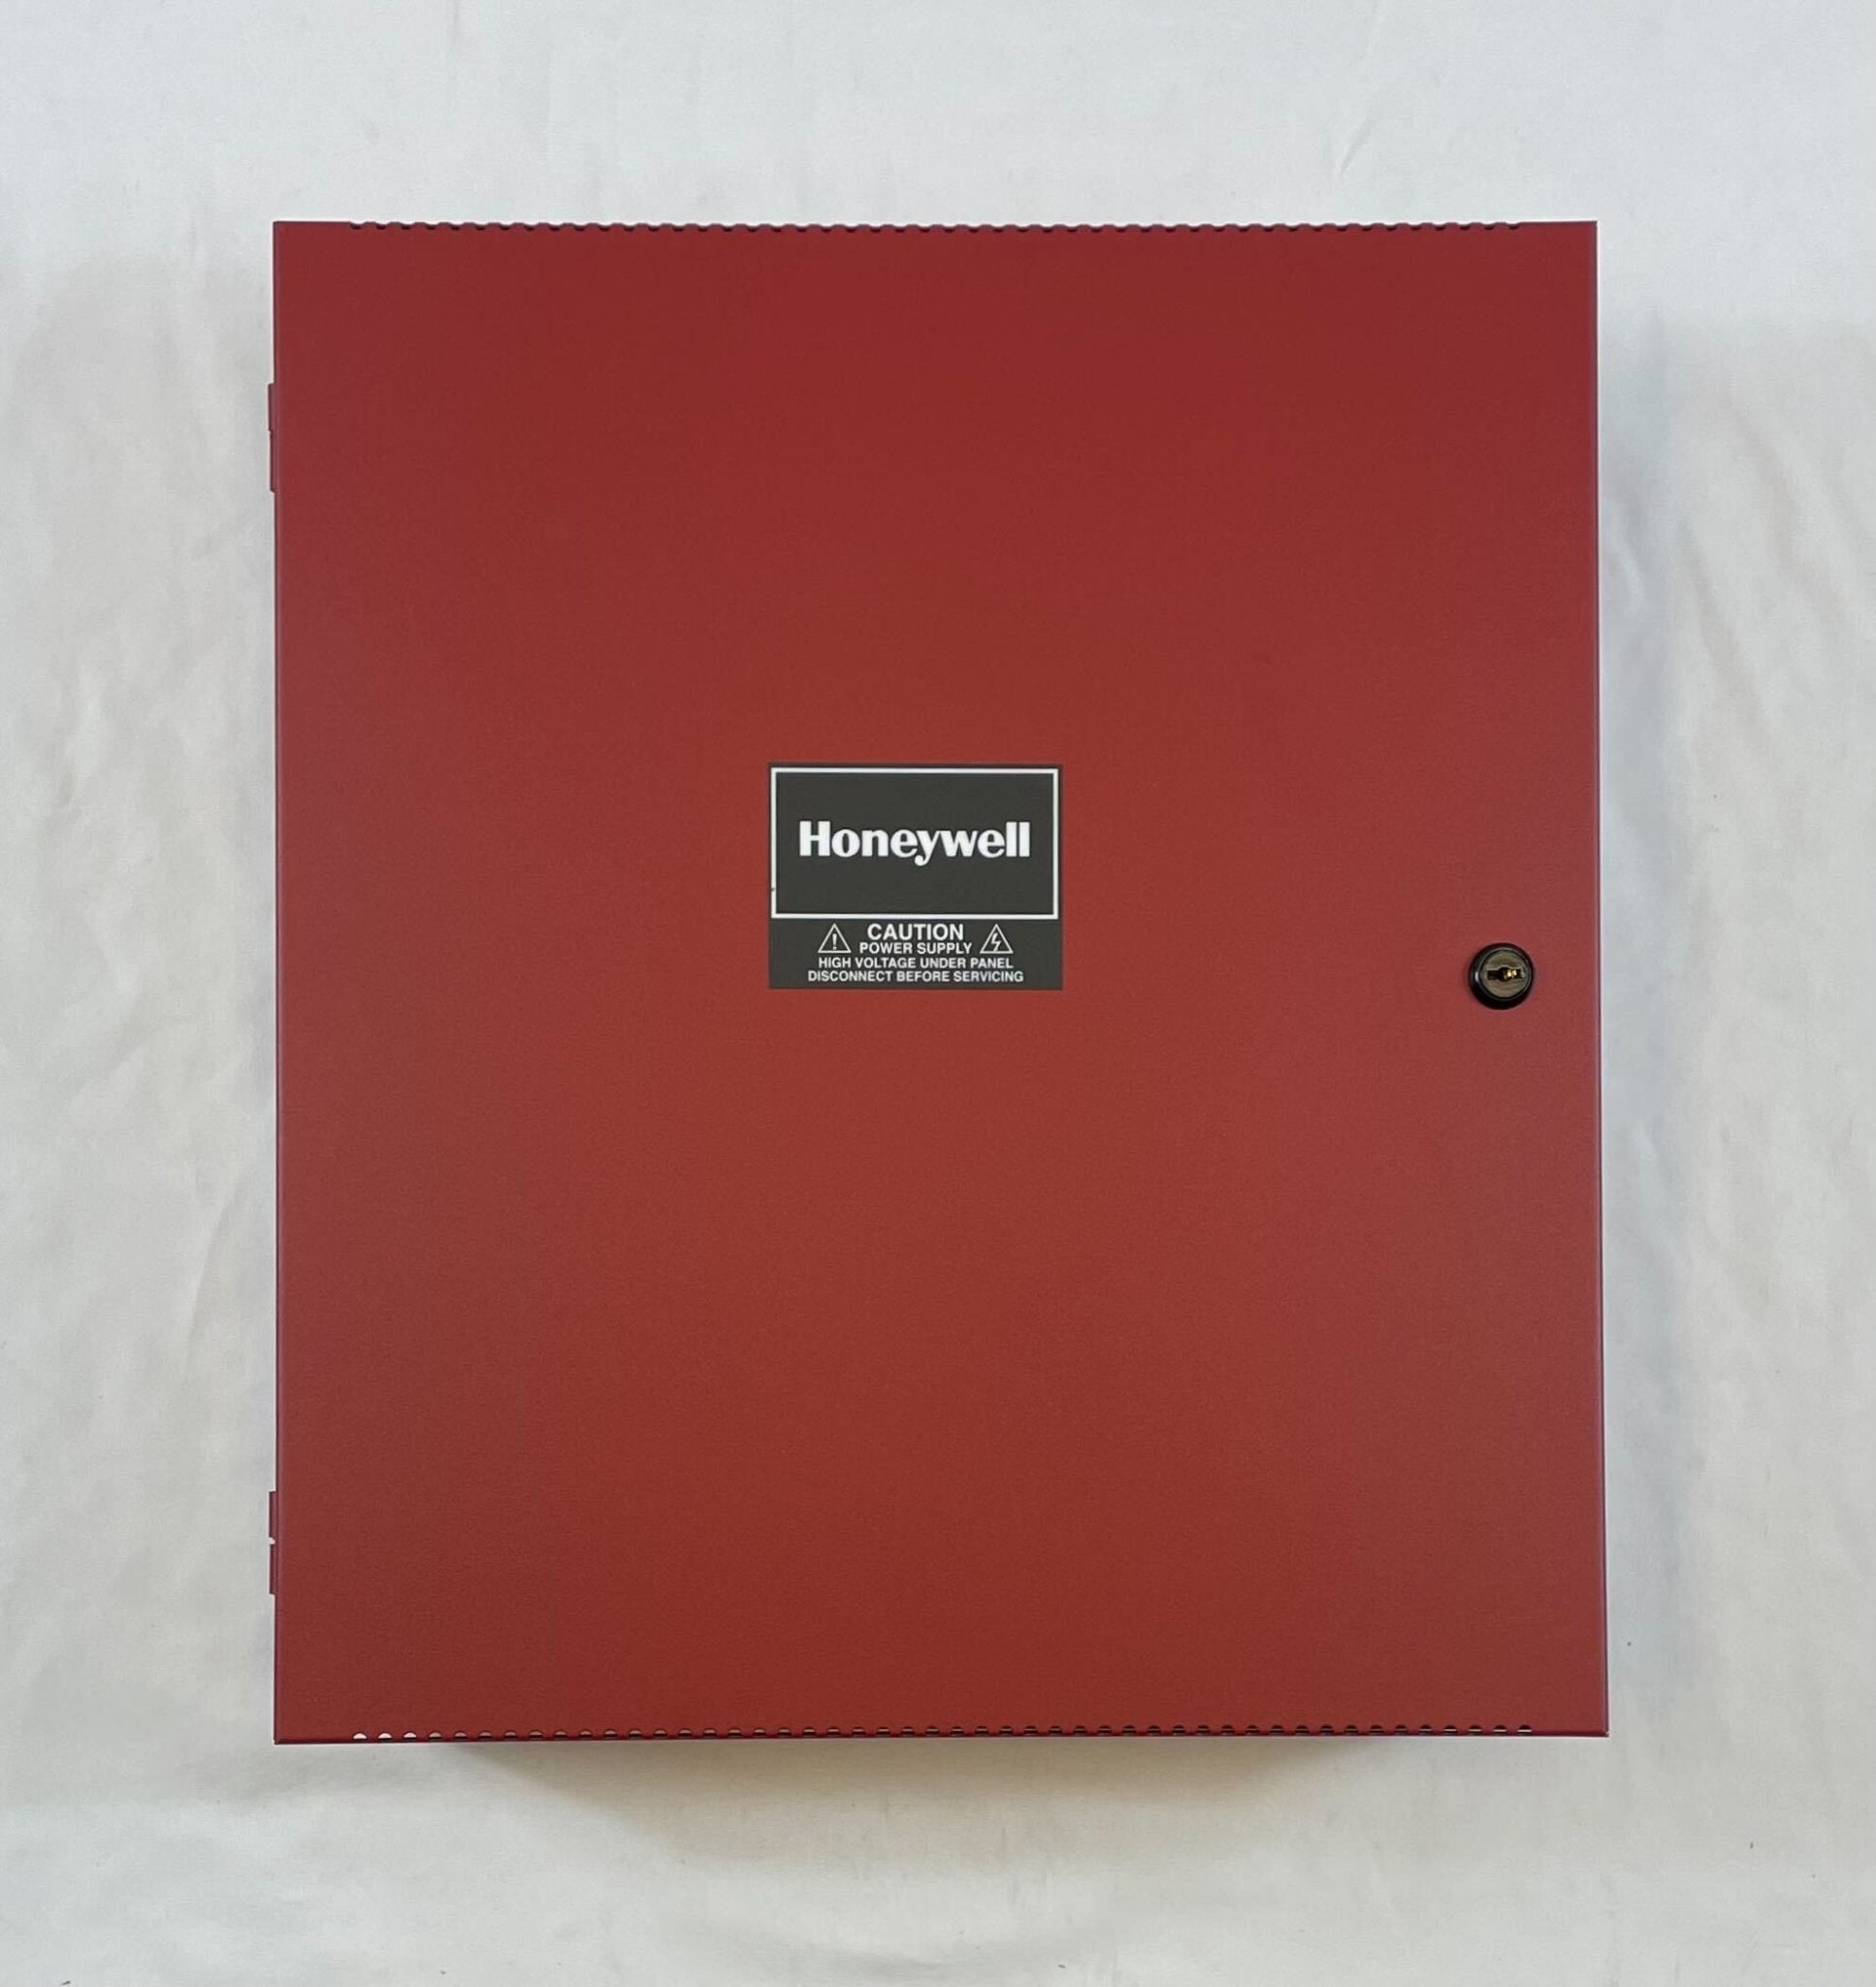 Honeywell HPFF12 - The Fire Alarm Supplier